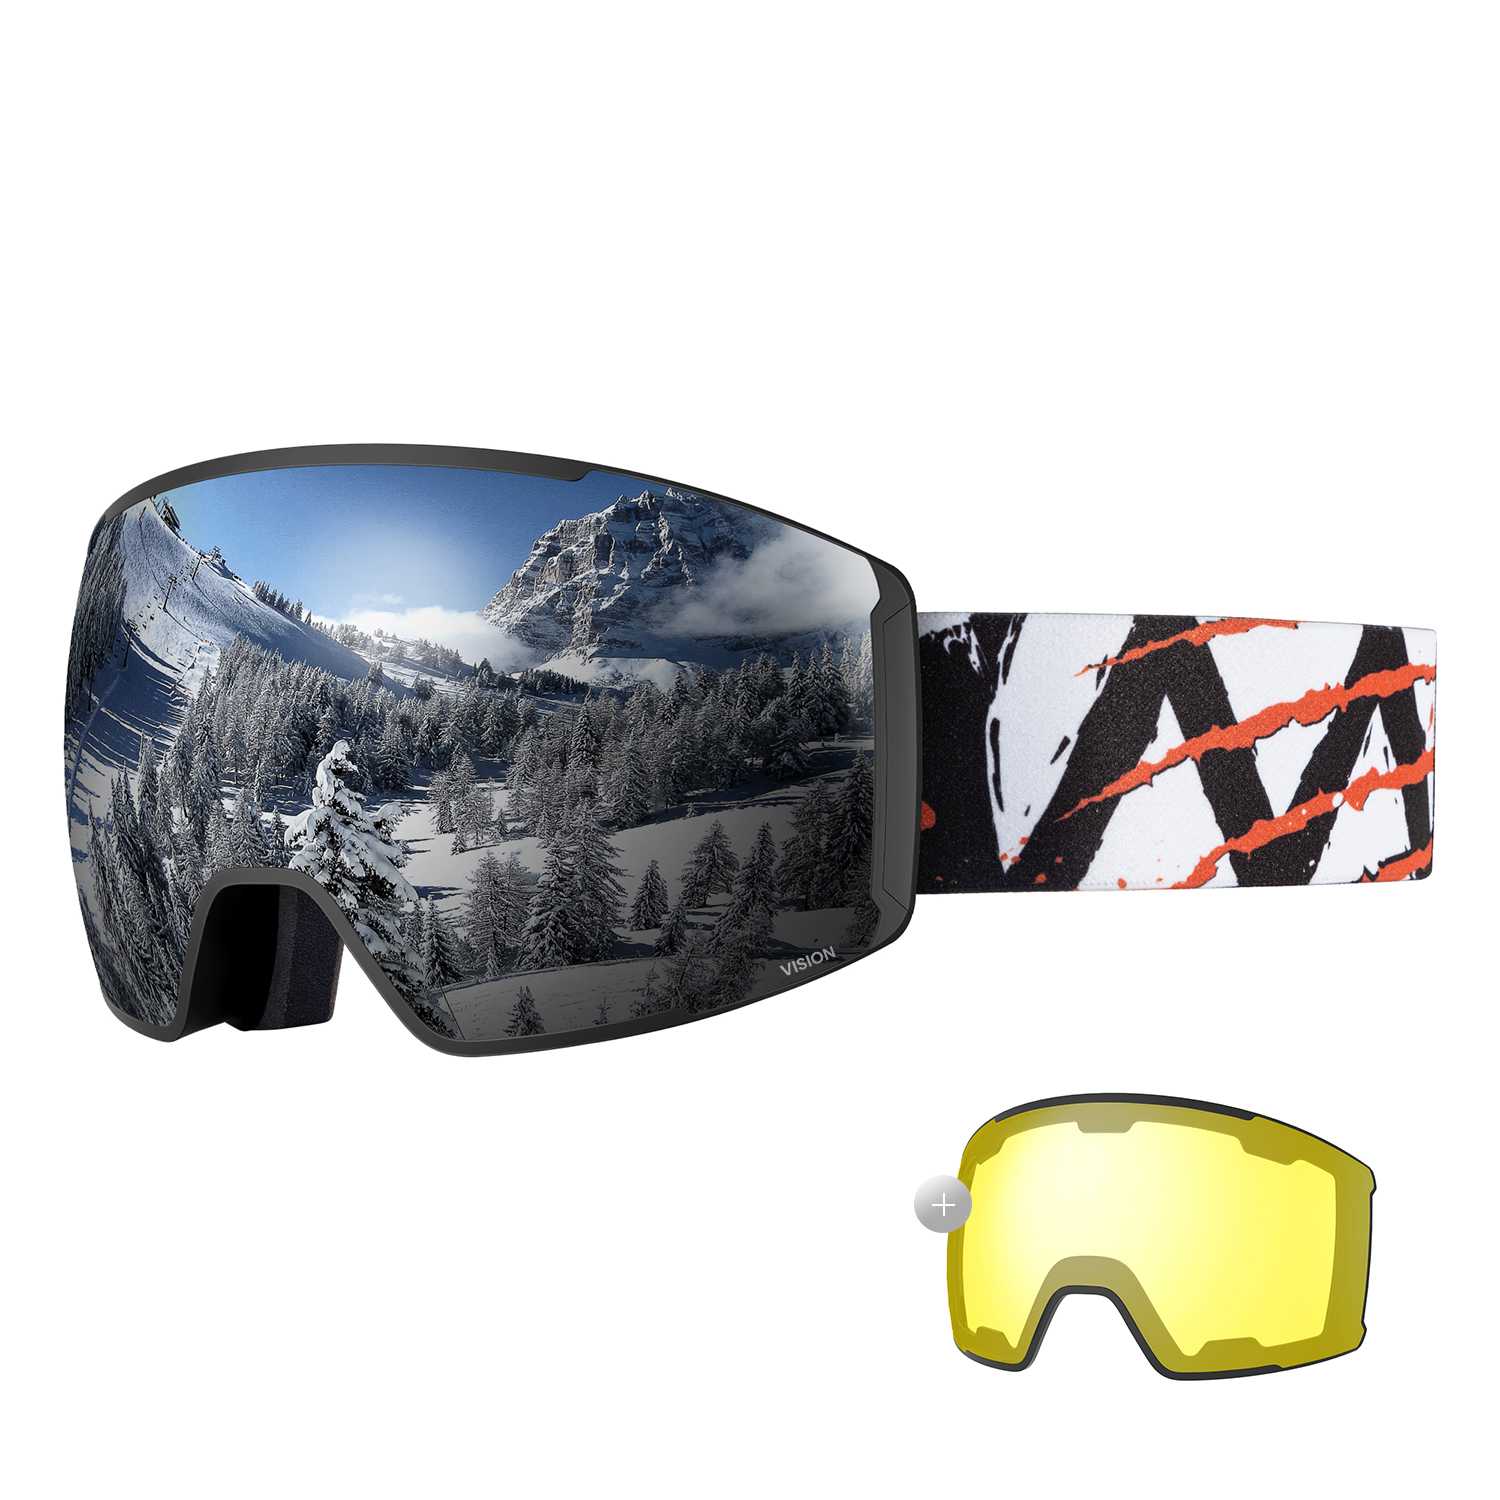 ski goggles for sunny days